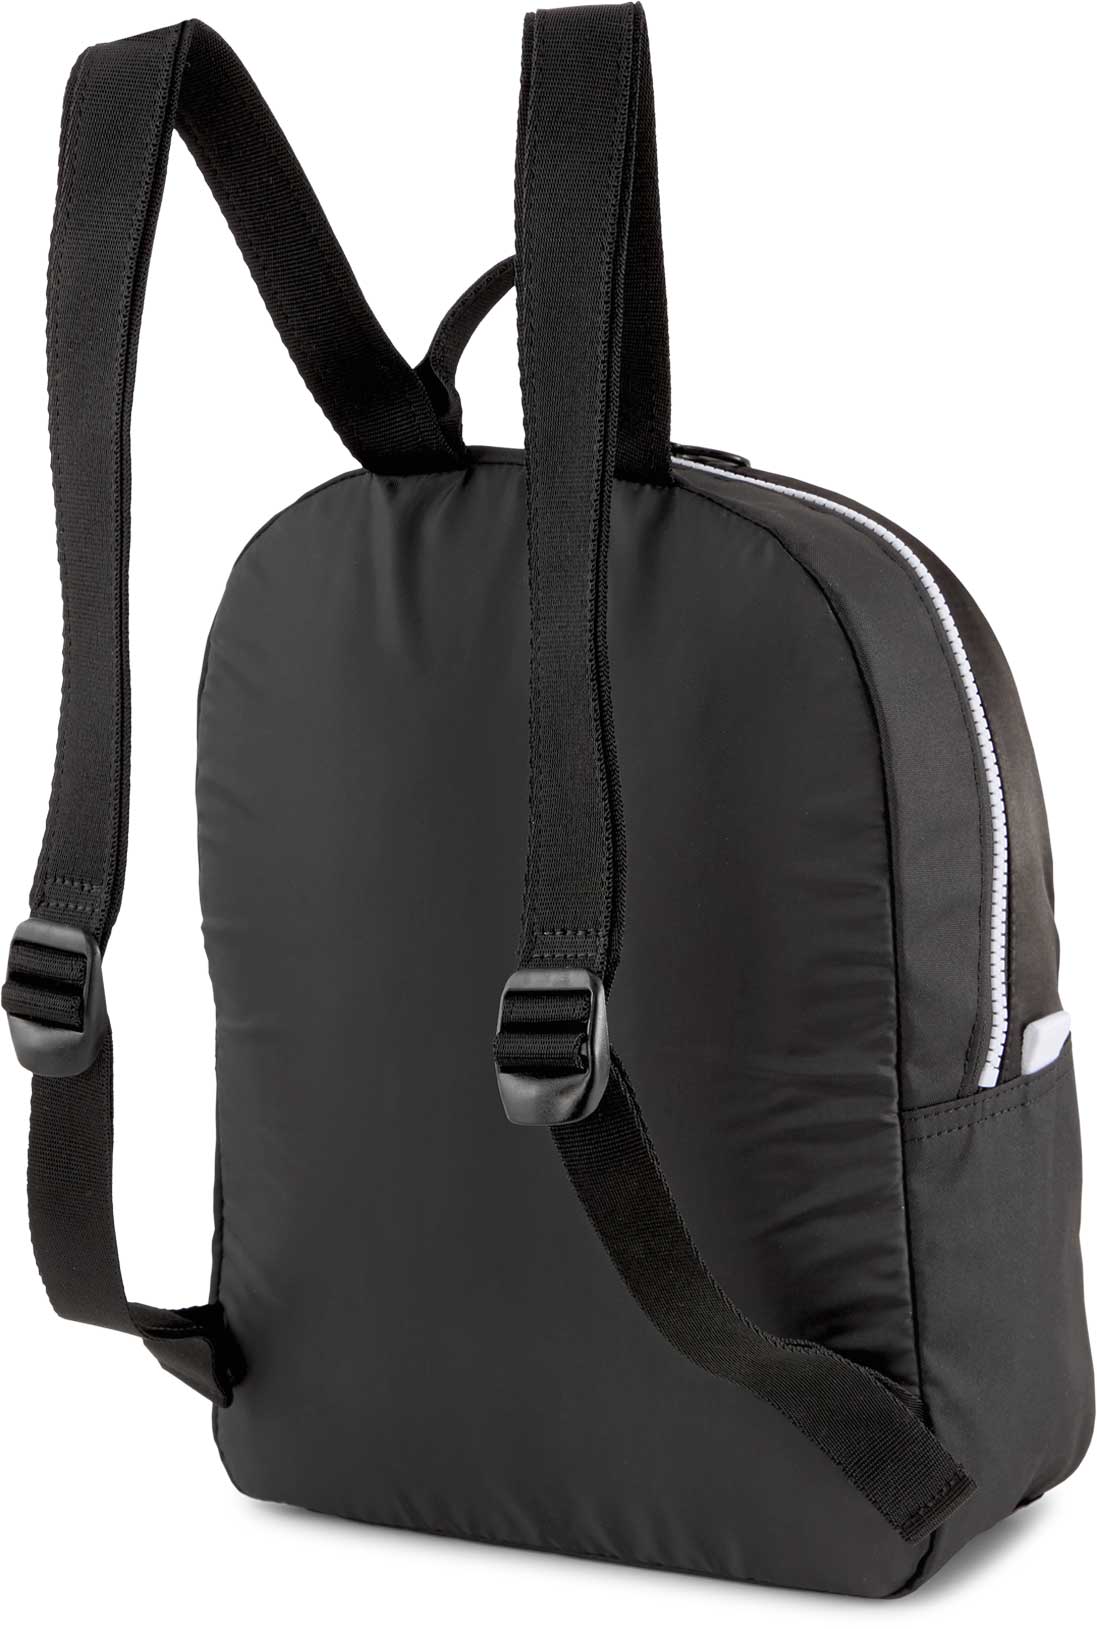 Stylish women's backpack